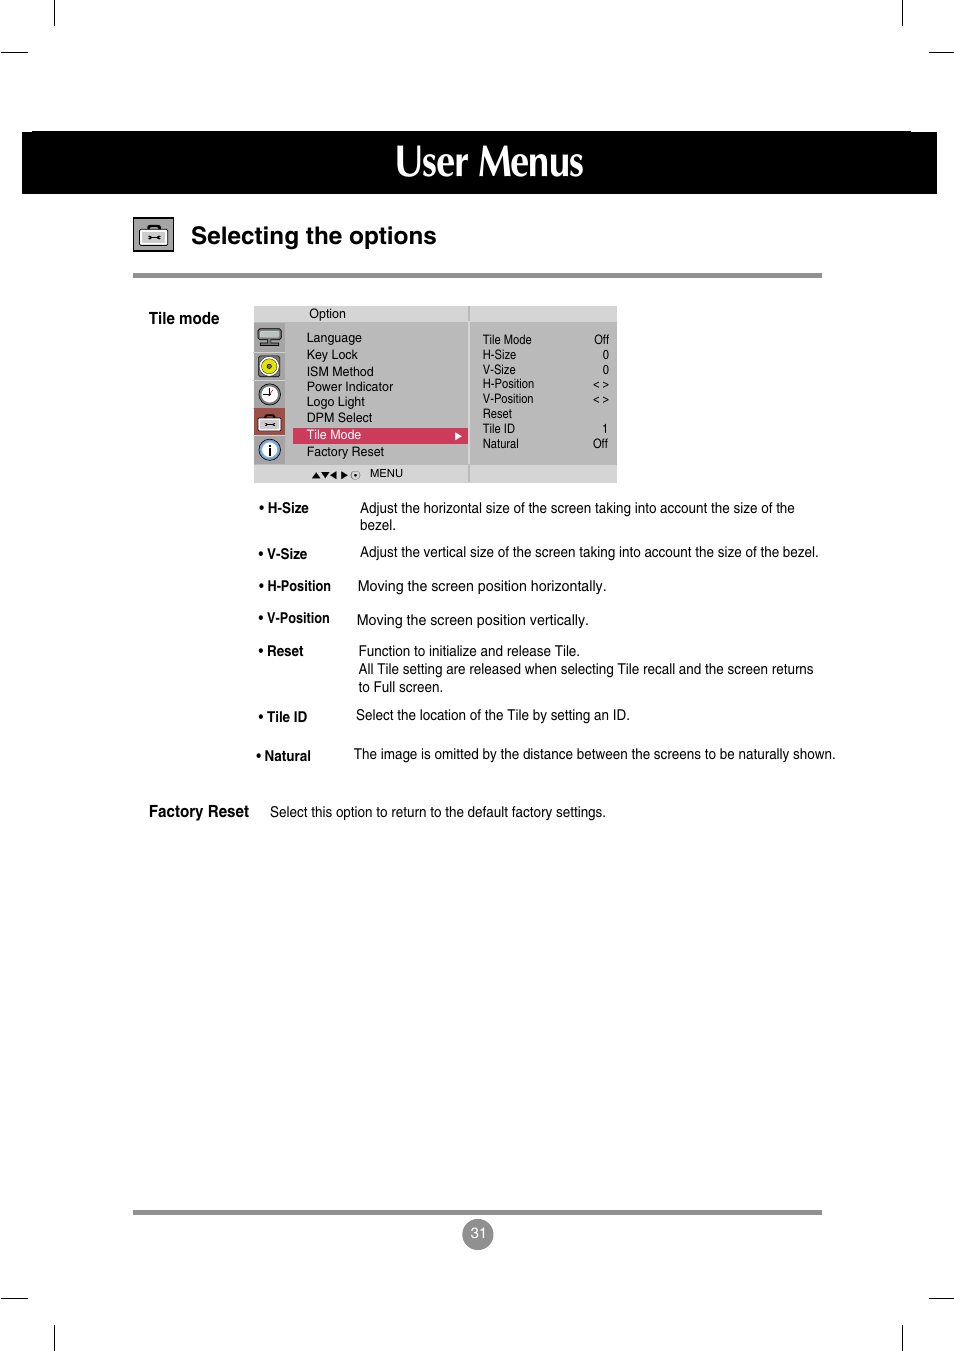 User menus, Selecting the options | LG M3202C-BA User Manual | Page 32 / 68